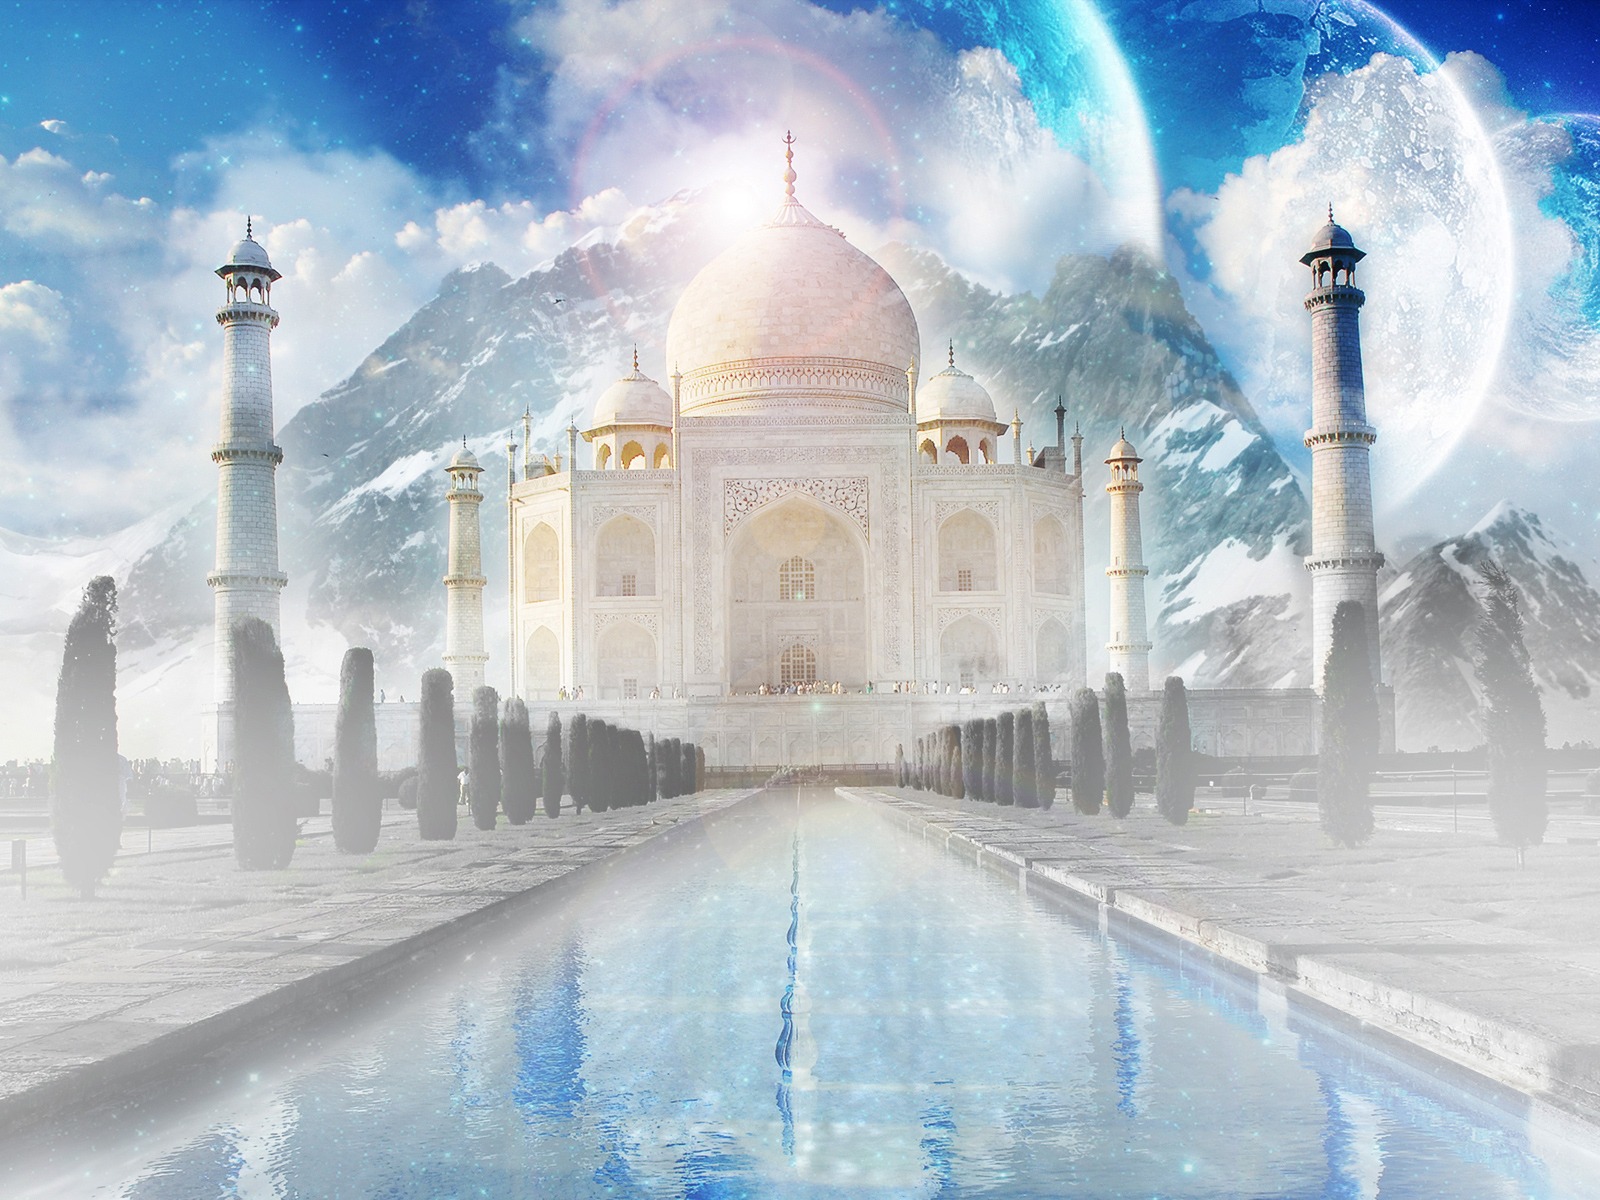 Taj Mahal HD Wallpaper APK for Android Download